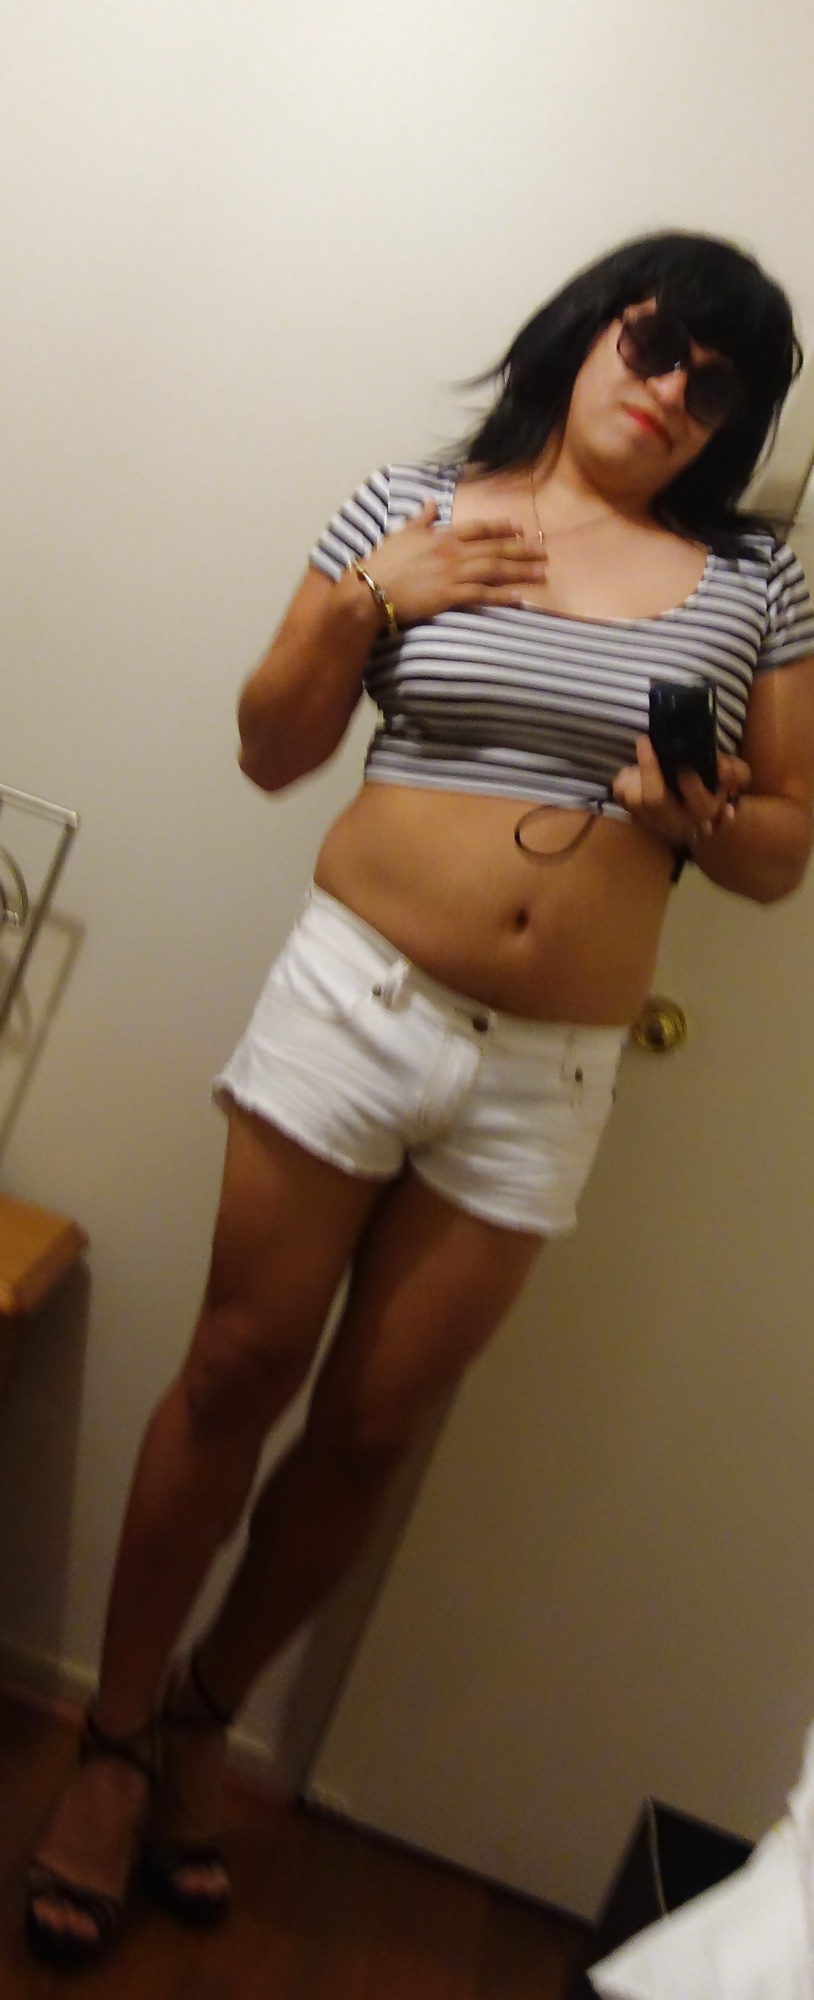 Shorts or Skirt? #28179646